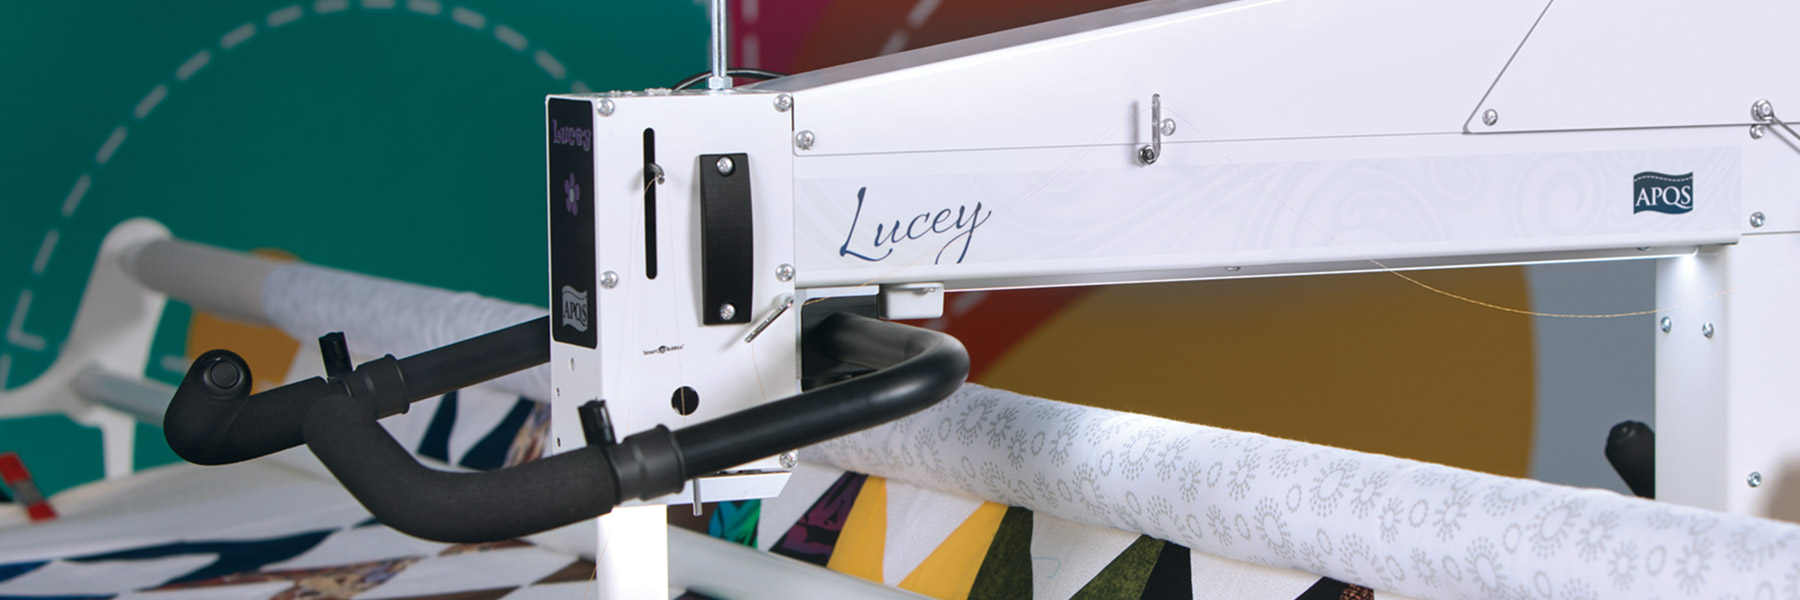 Lucey Longarm Quilting Machine